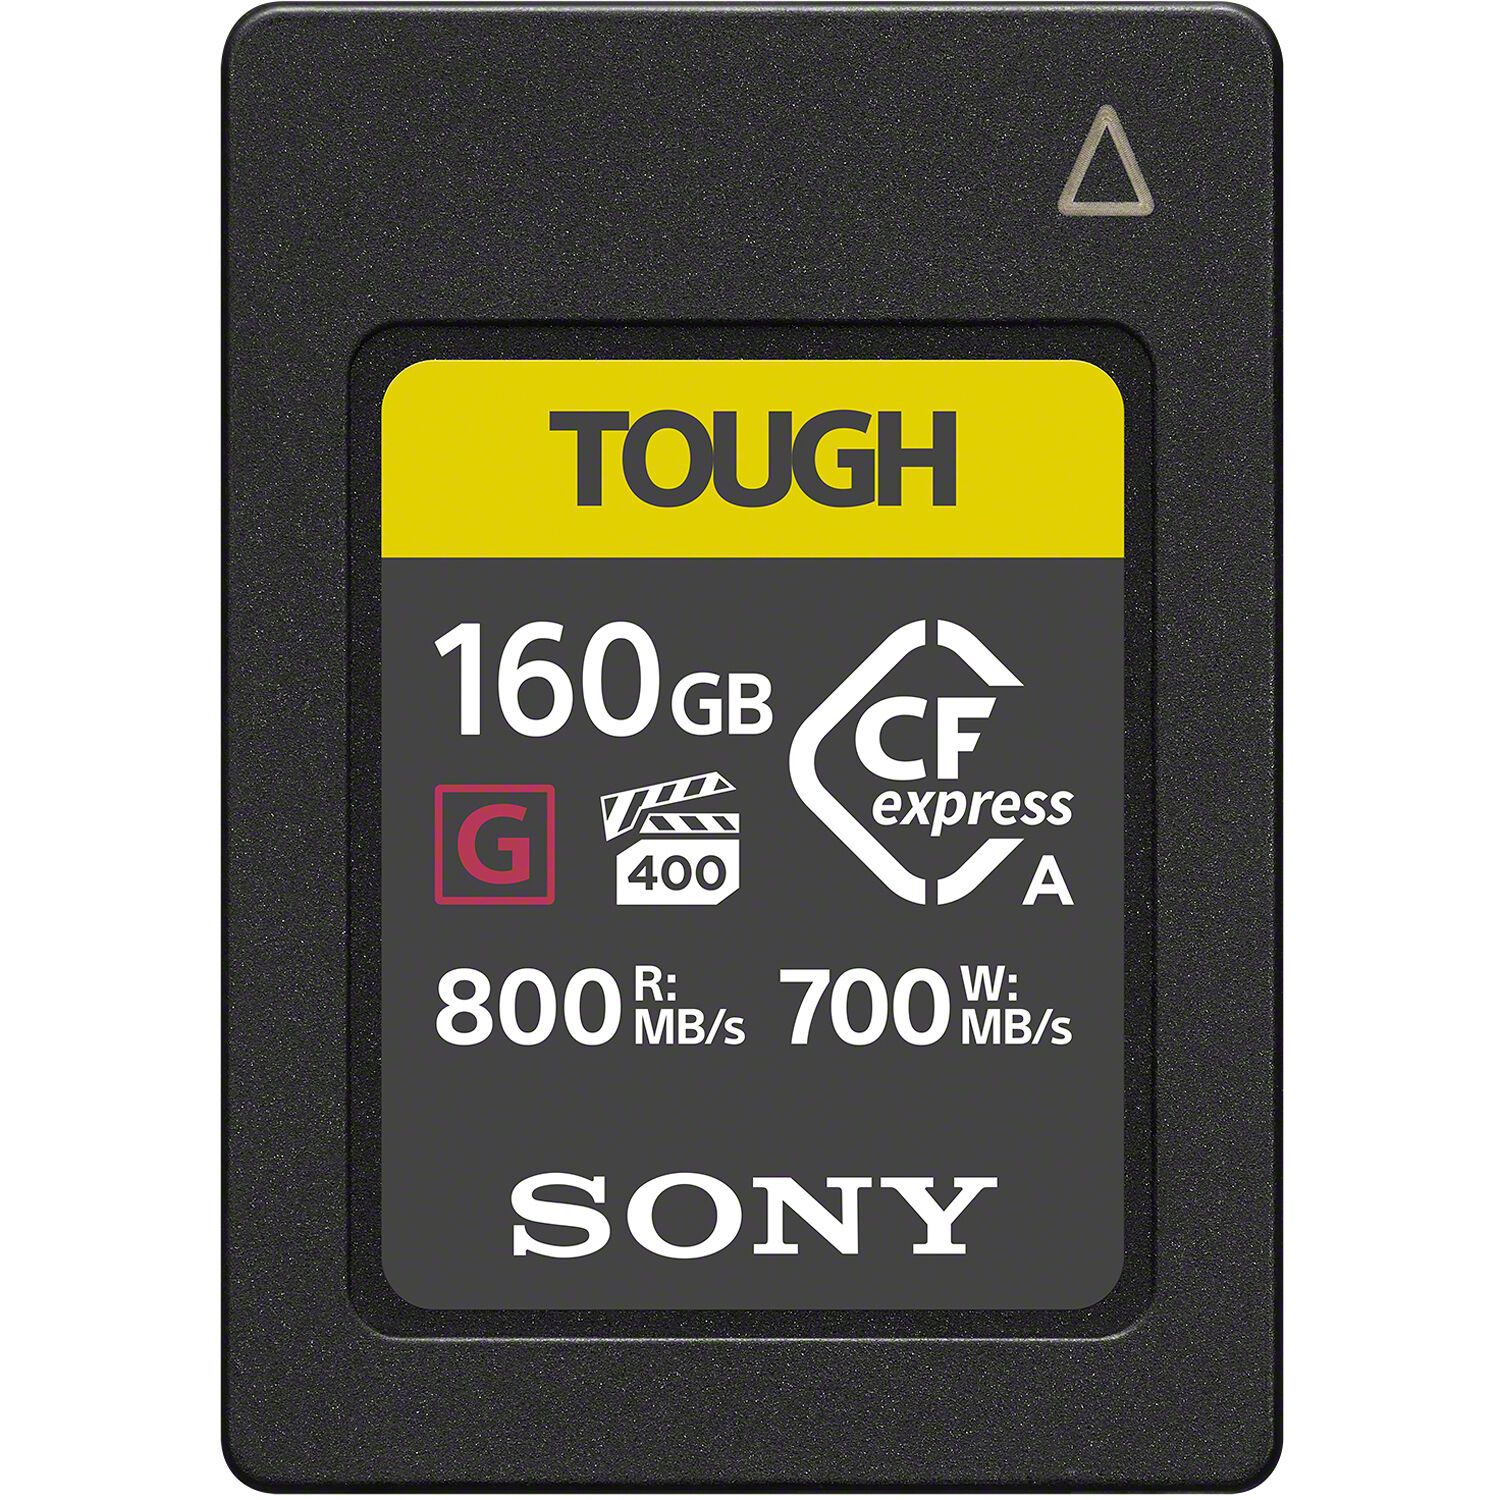 SONY - CFexpress Card 160GB Type A TOUGH 